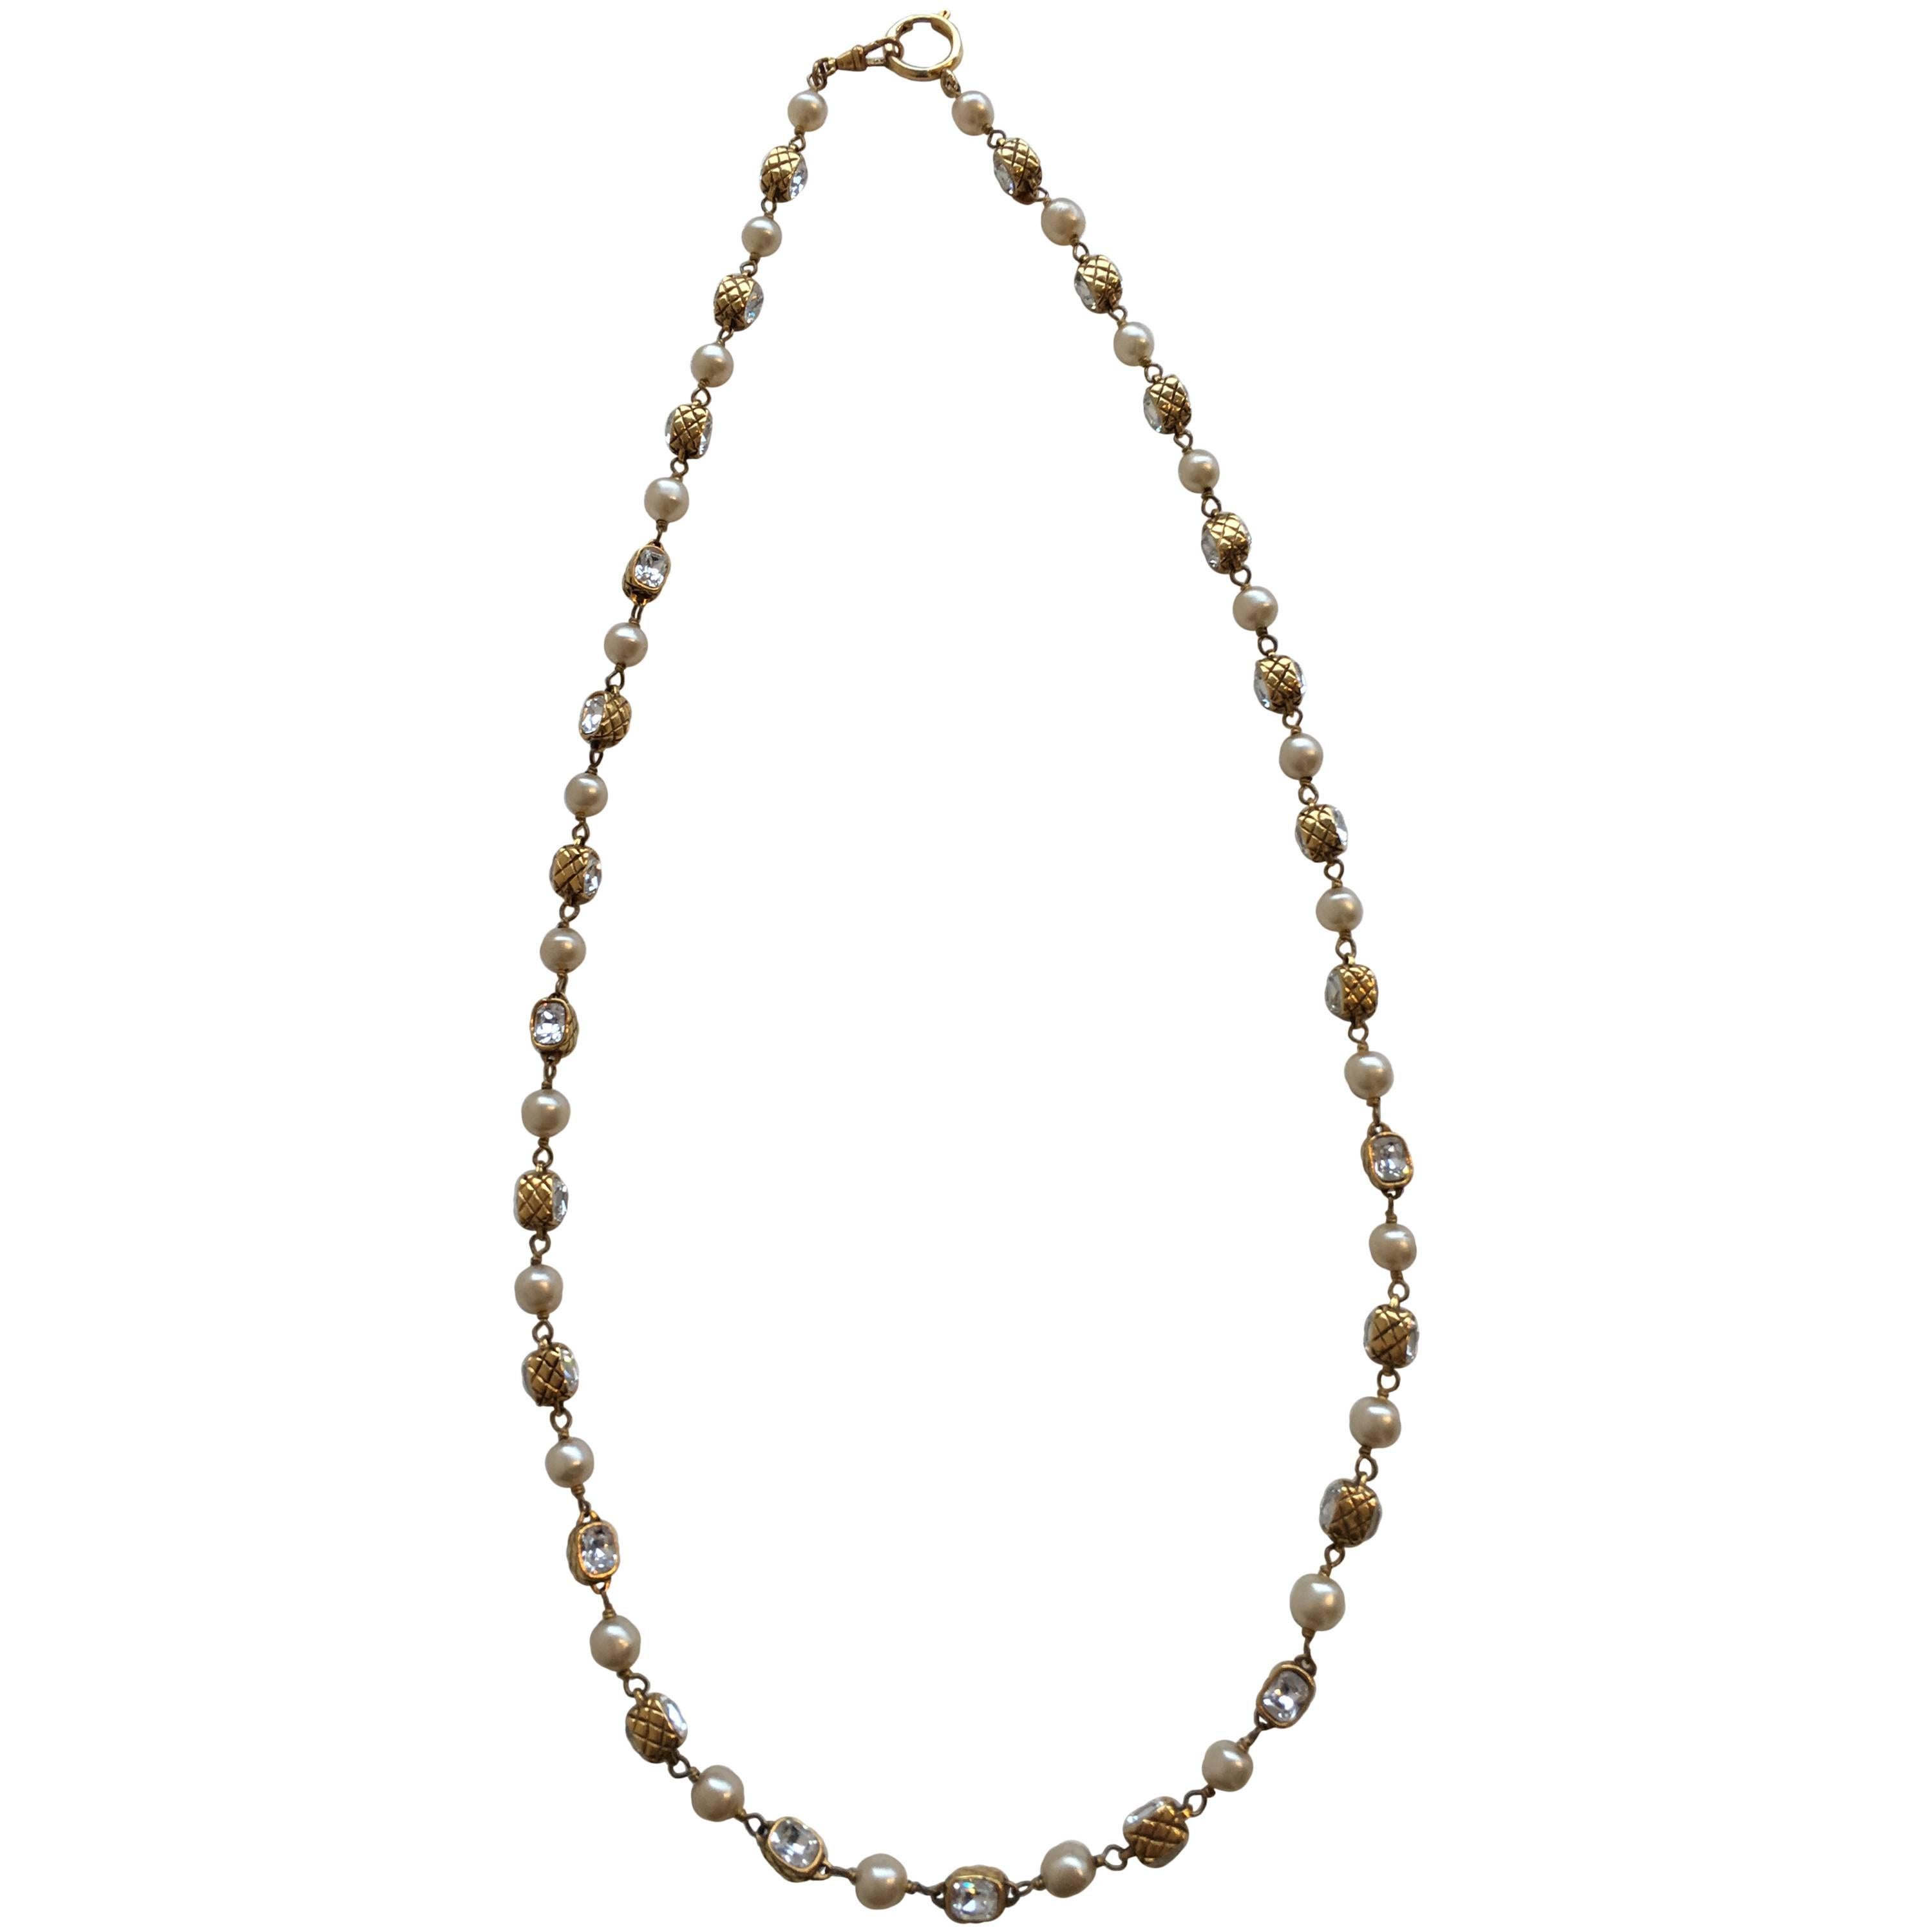 Chanel Sautoir Necklace, 34" Length